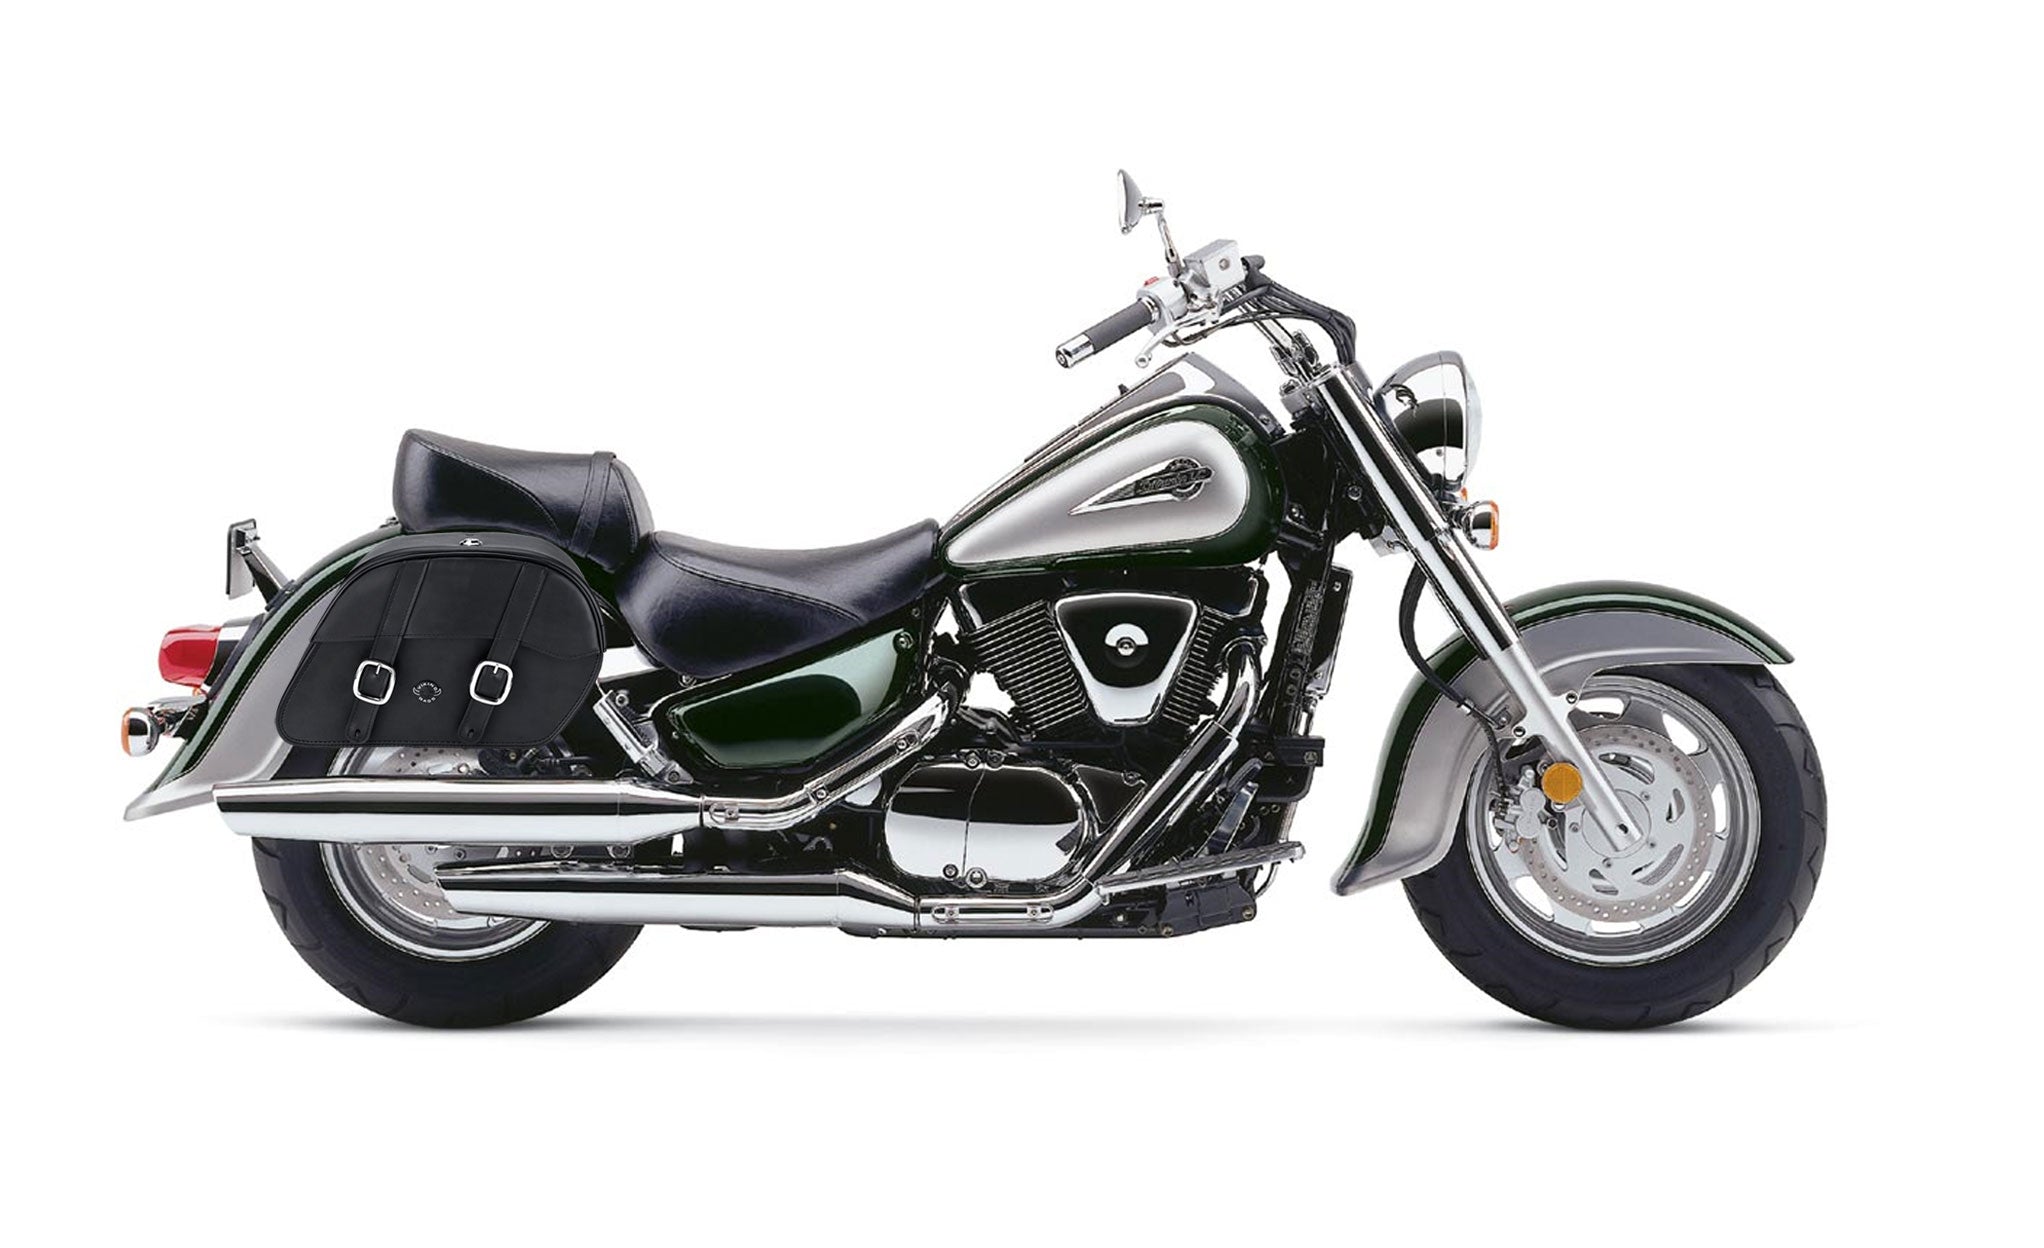 Viking Skarner Medium Lockable Suzuki Intruder 1500 Vl1500 Leather Motorcycle Saddlebags on Bike Photo @expand